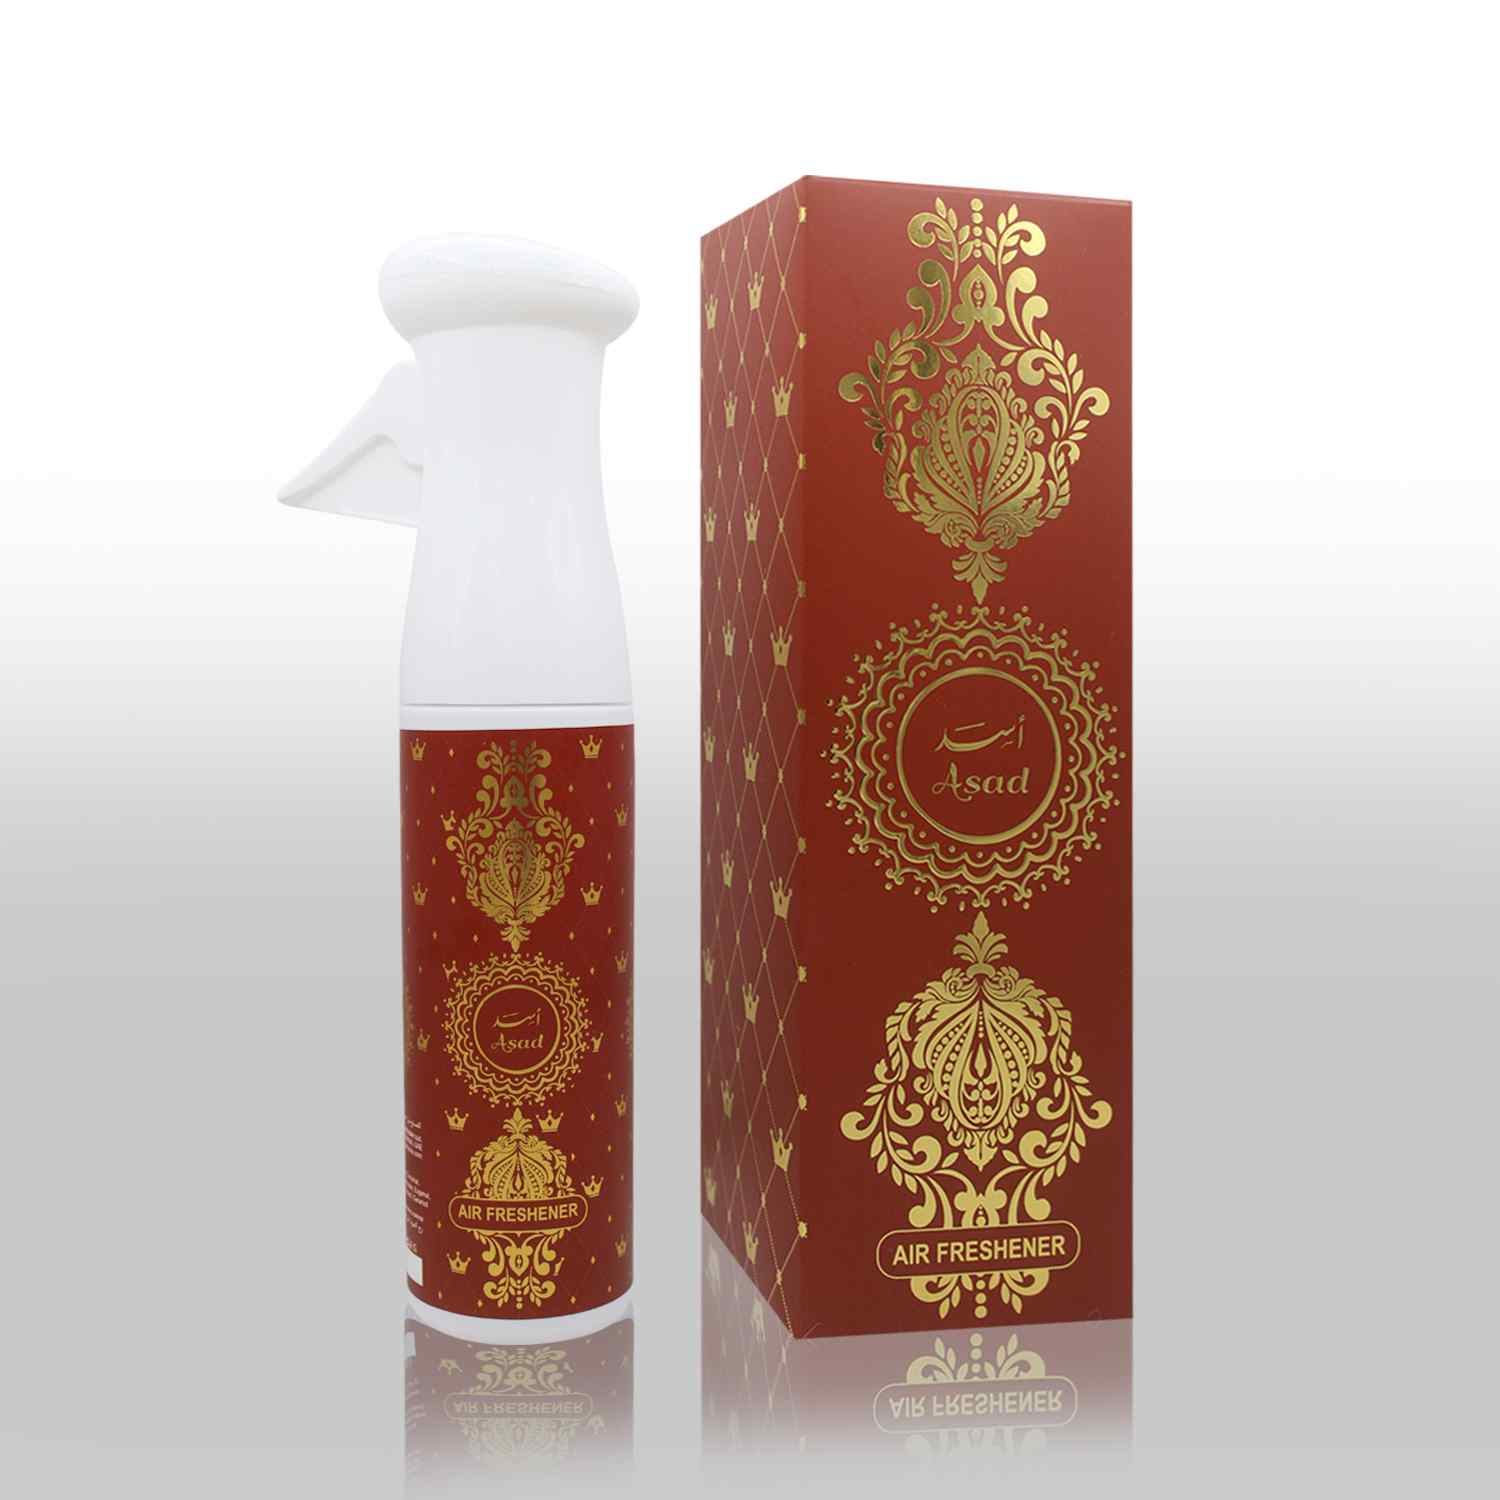 Asad Arabic Air Freshener by Ard perfumes